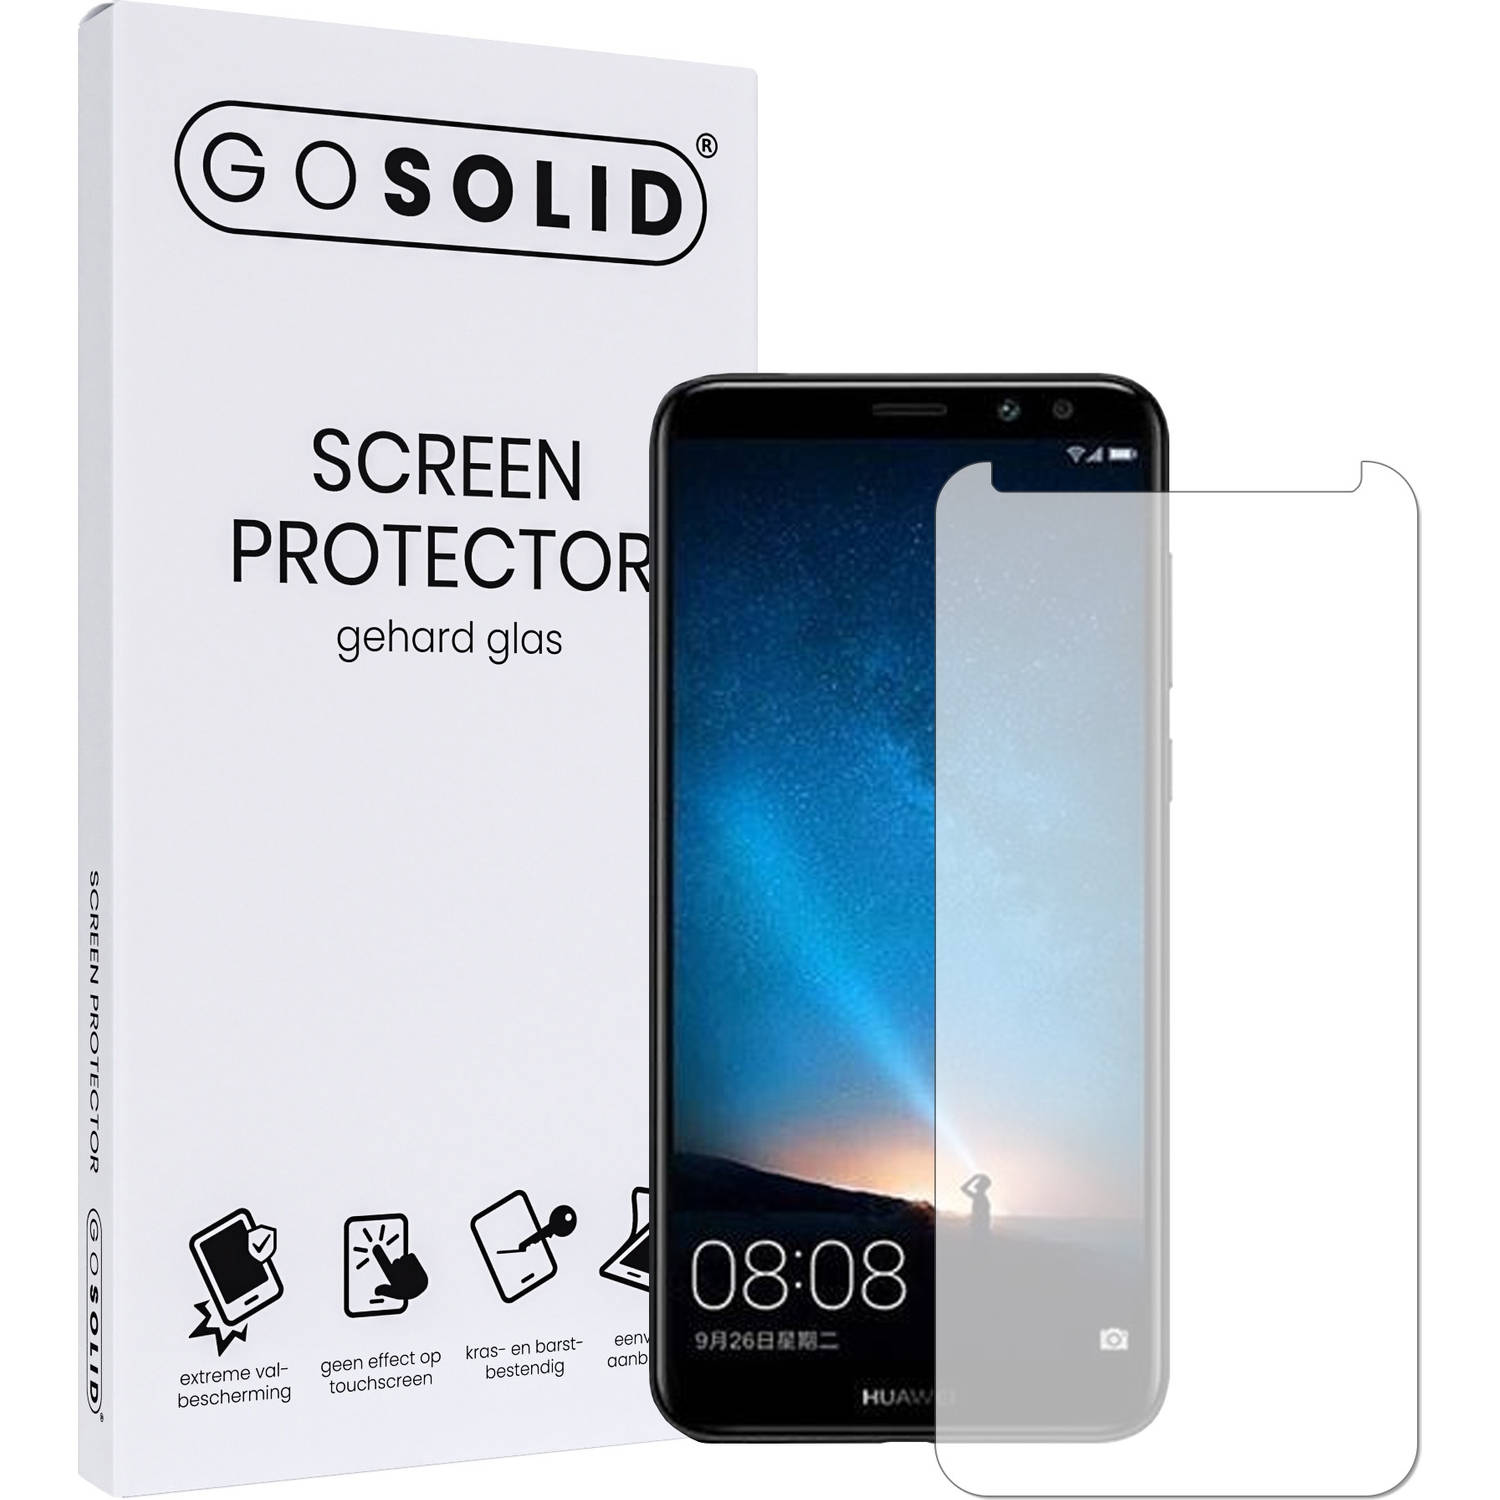 GO SOLID! ® screenprotector Huawei Mate 10 Pro - gehard glas